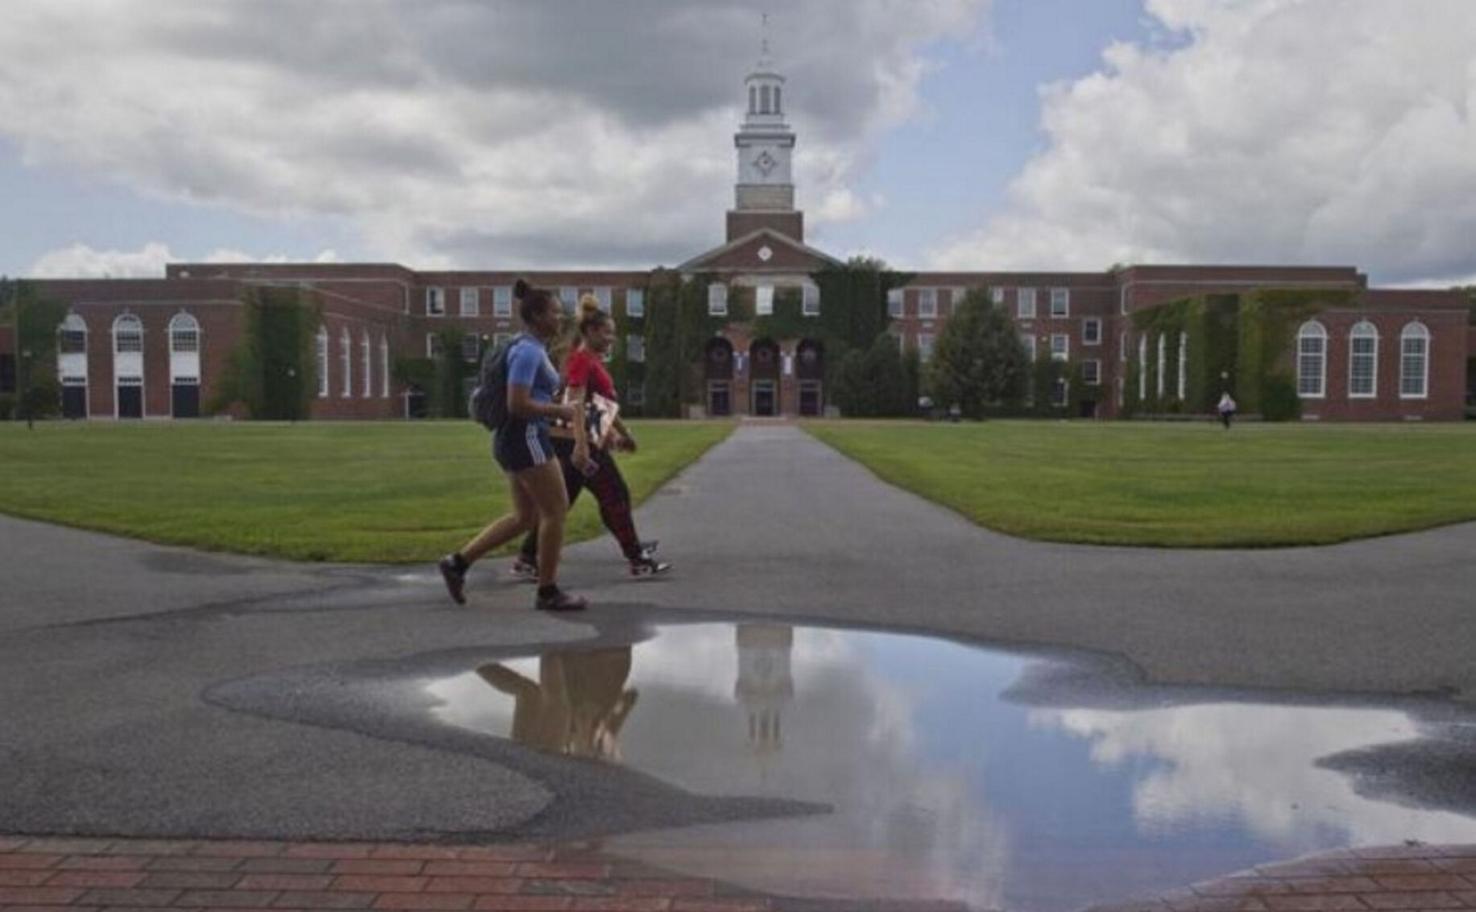 SUNY Potsdam’s academic realignment plan moving some degree programs